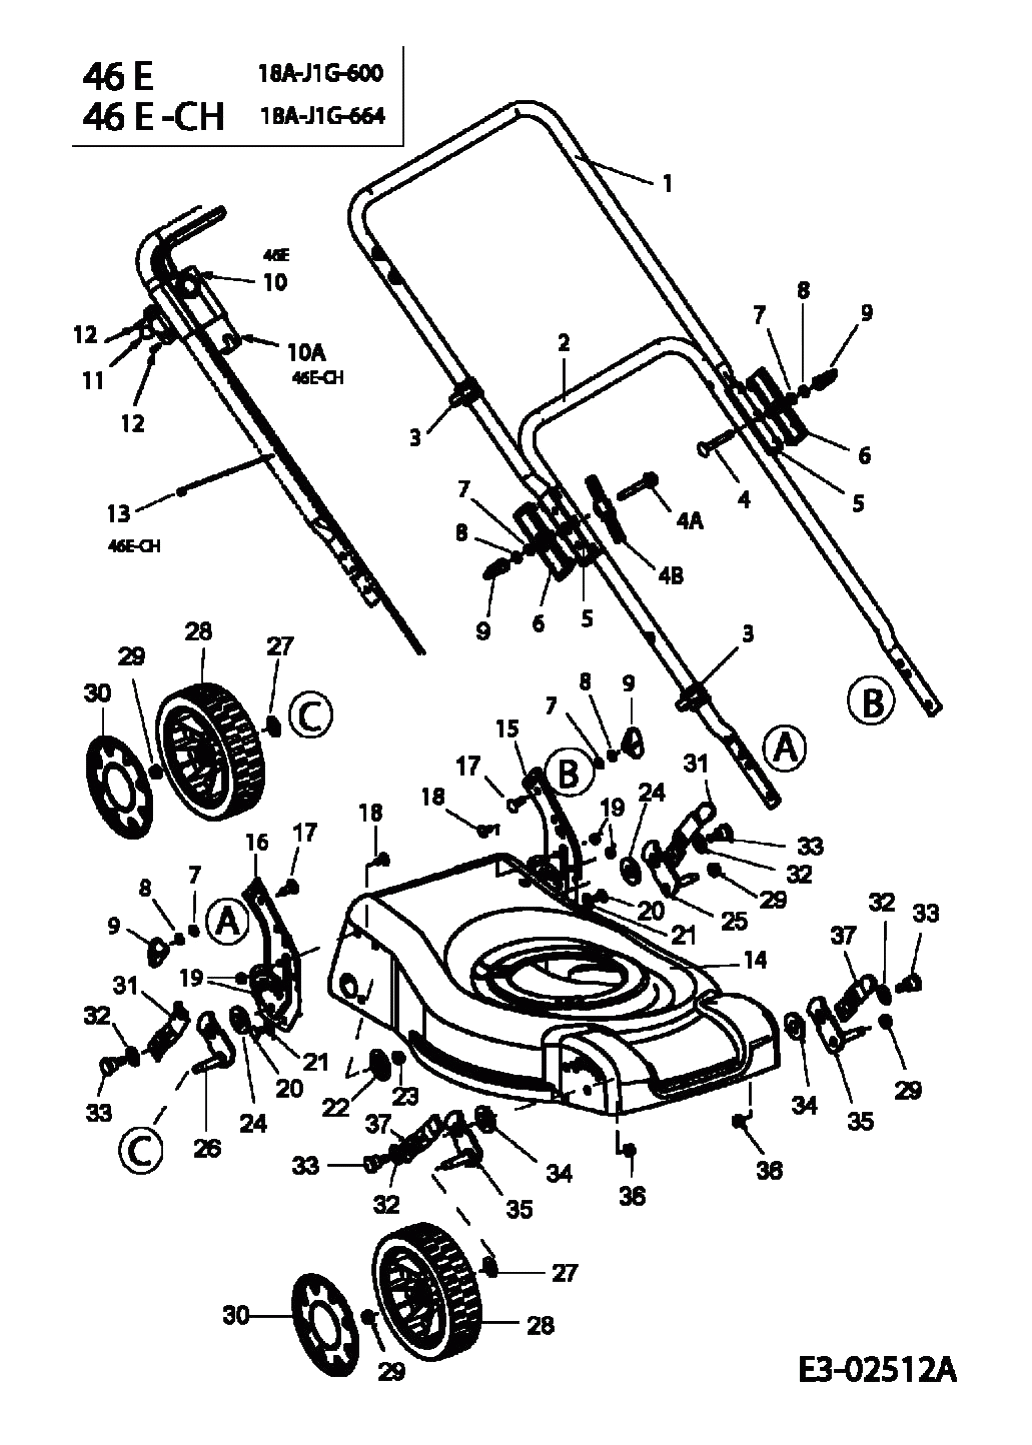 MTD Артикул 18A-J1G-600 (год выпуска 2005). Ручка, колеса, регулятор высоты реза